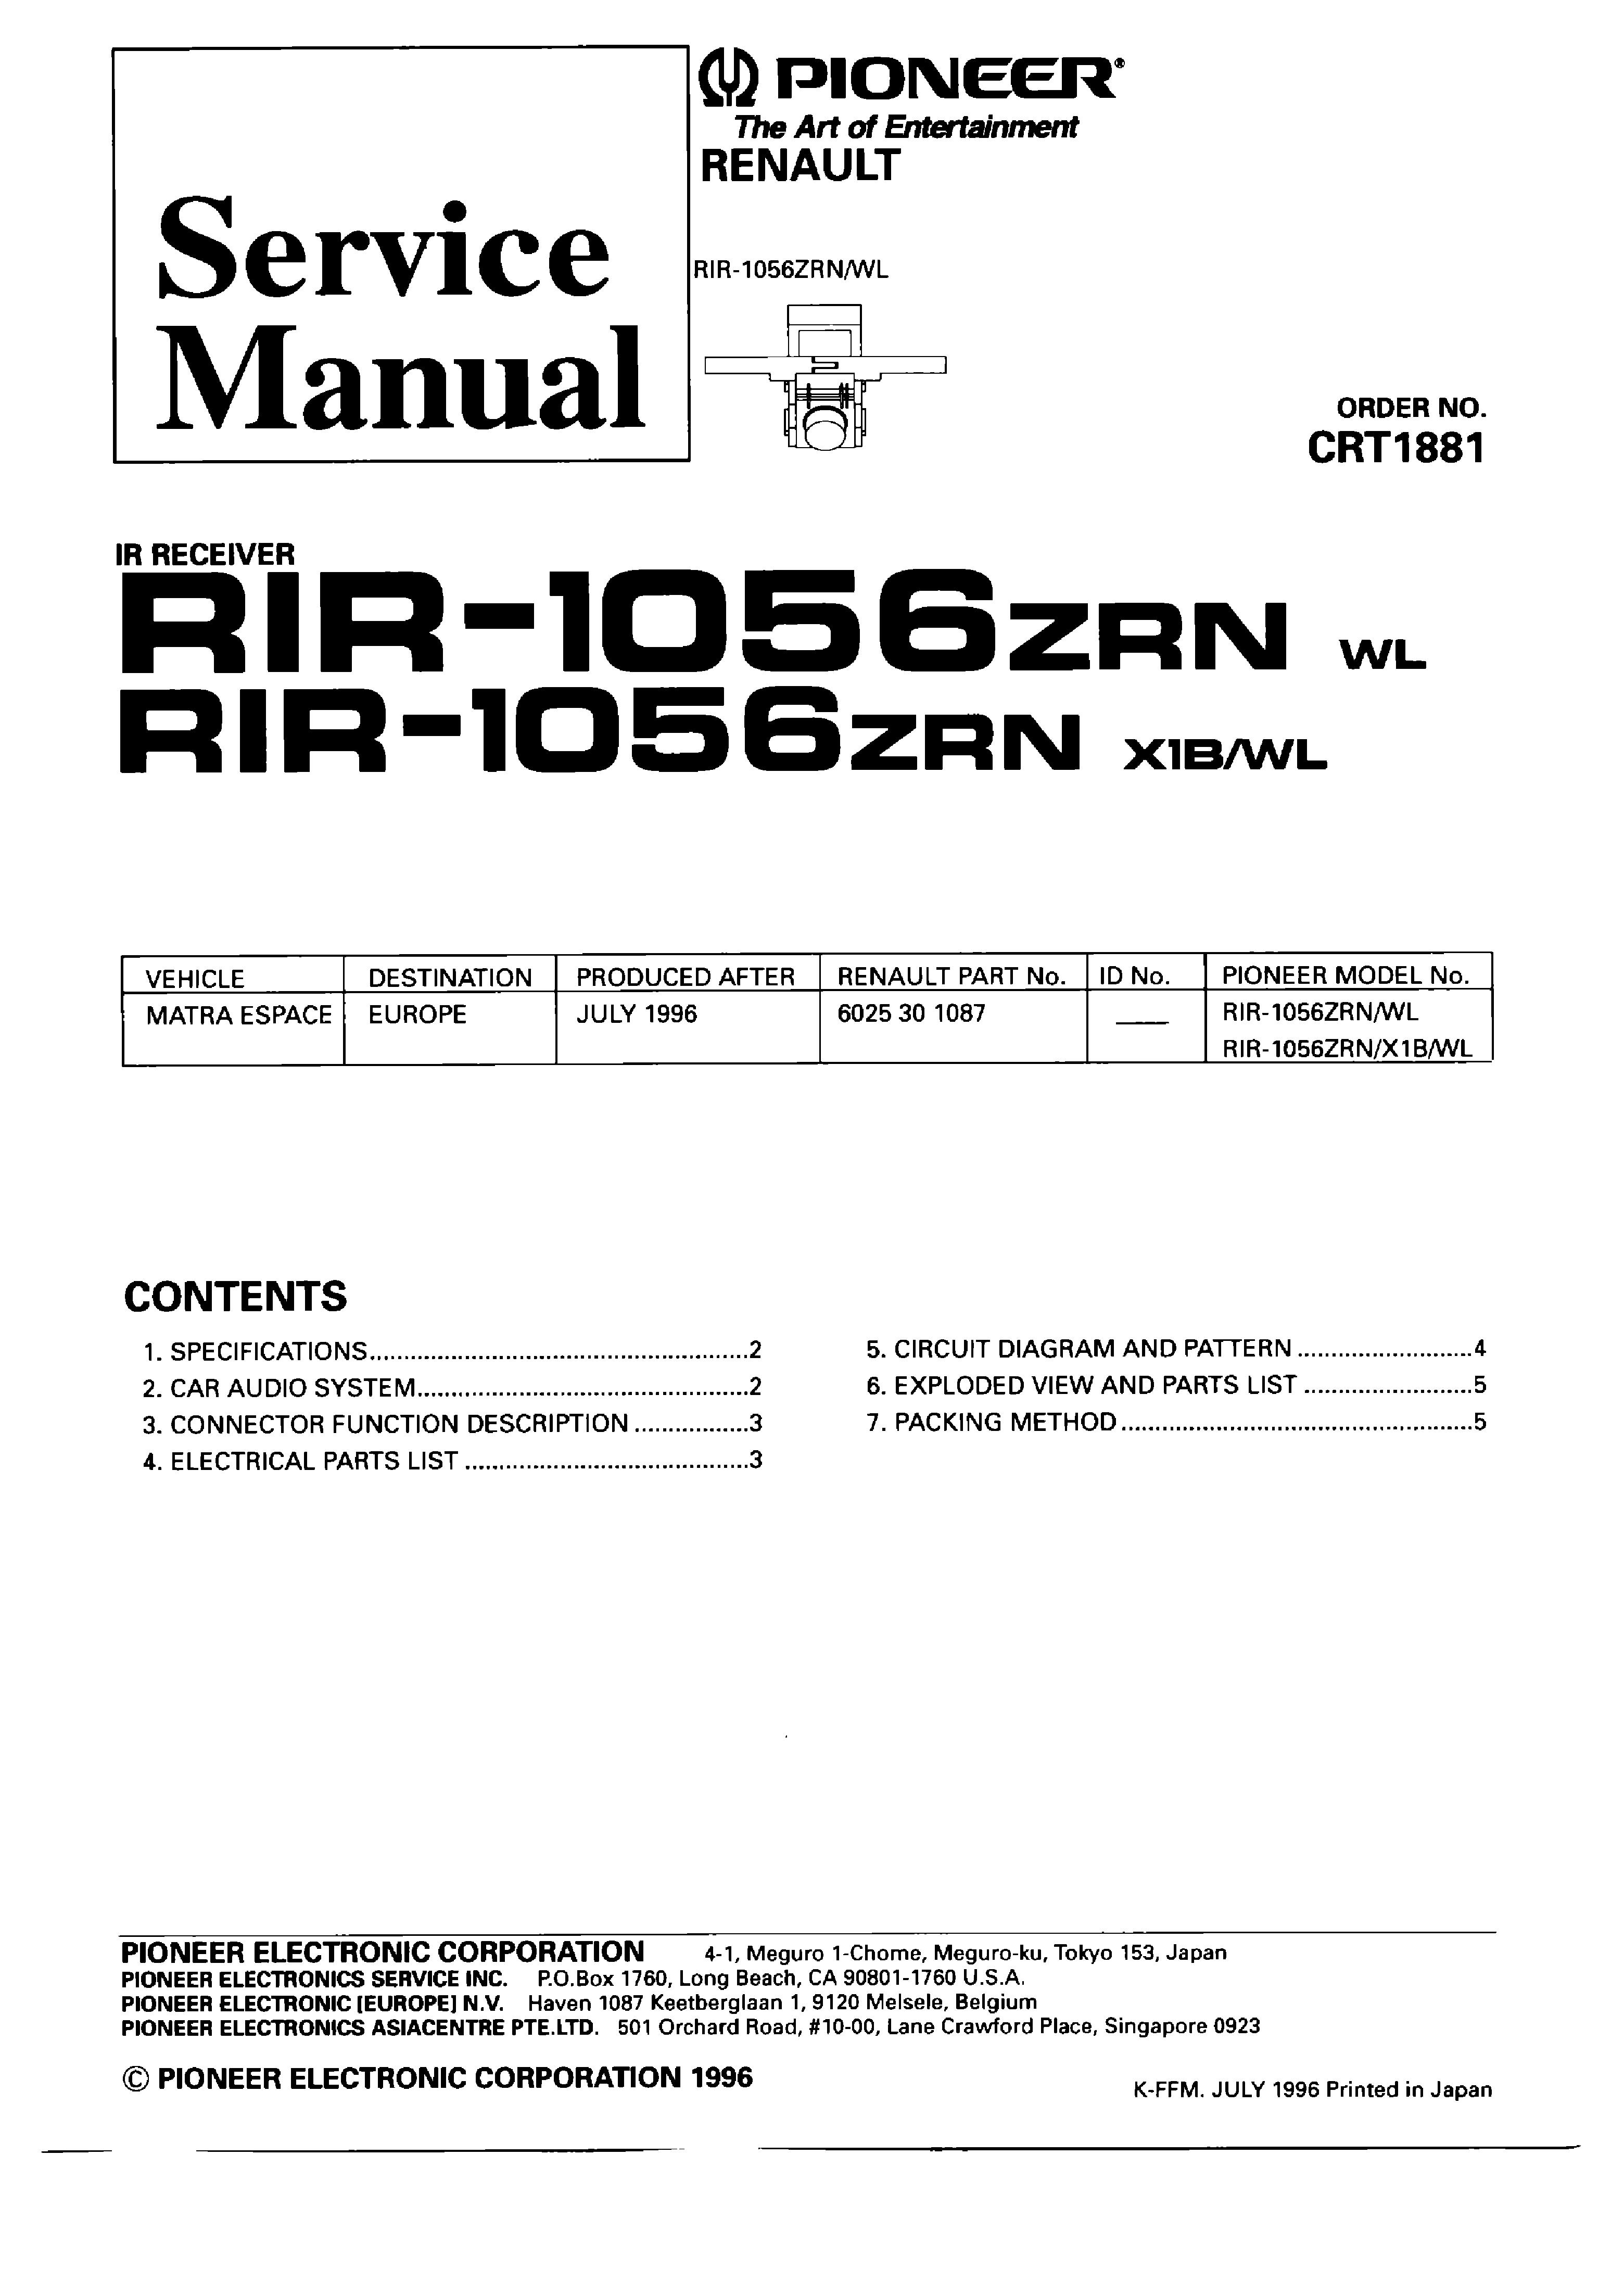 PIONEER RIR-1056ZRN RENAULT CRT1881 service manual (1st page)